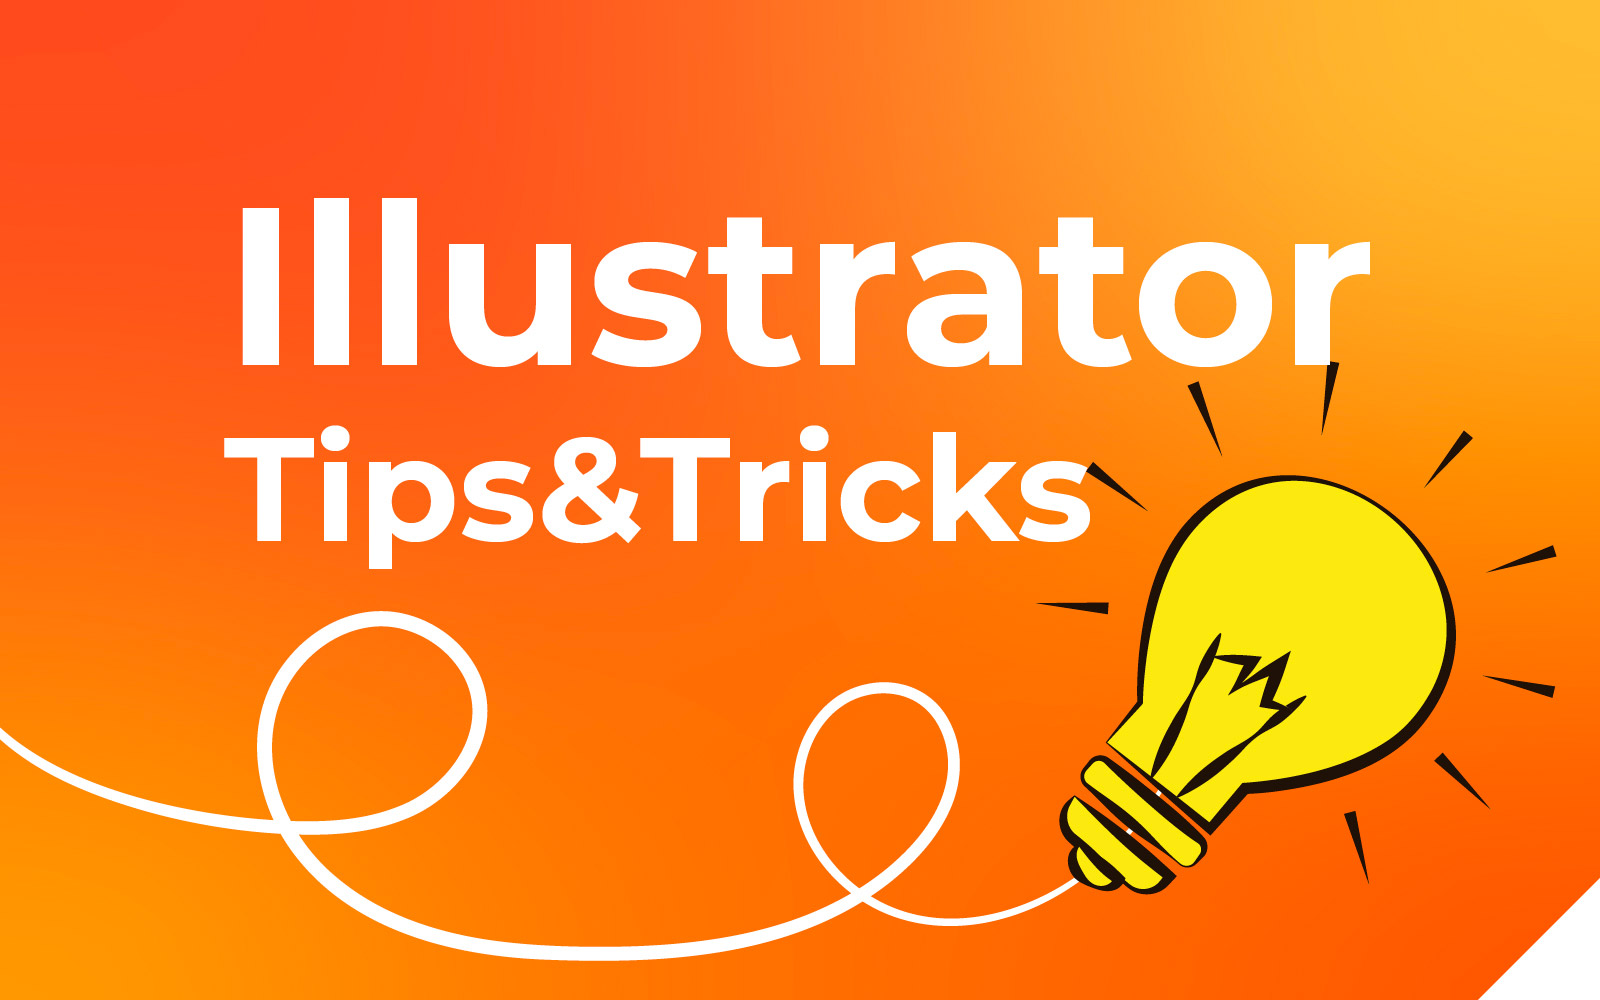 Illustrator Tips&Tricks